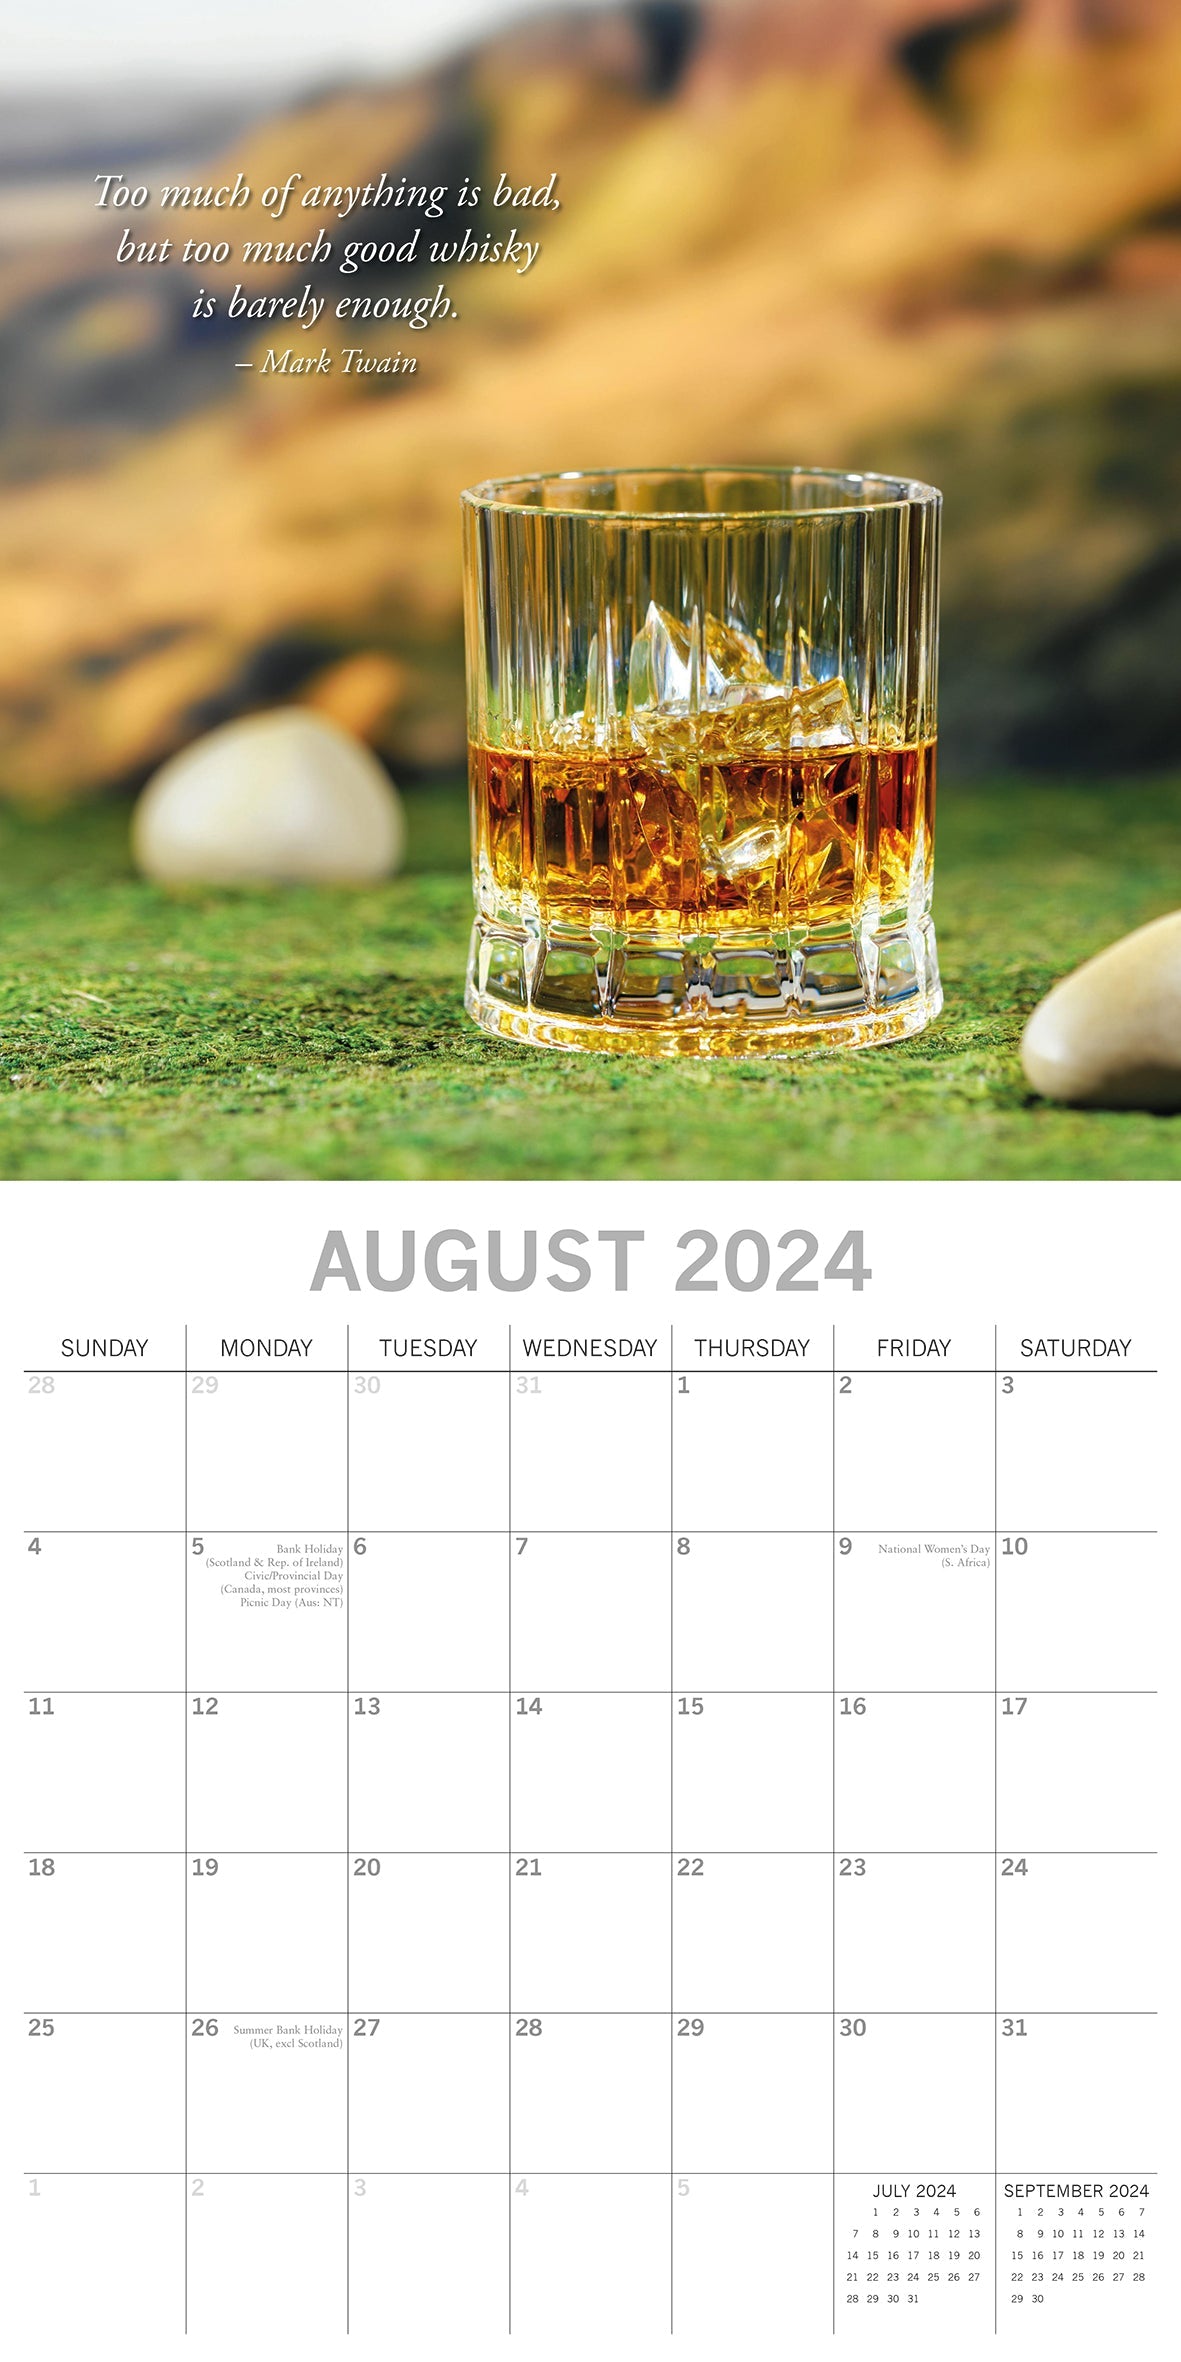 2024 Whisky - Square Wall Calendar